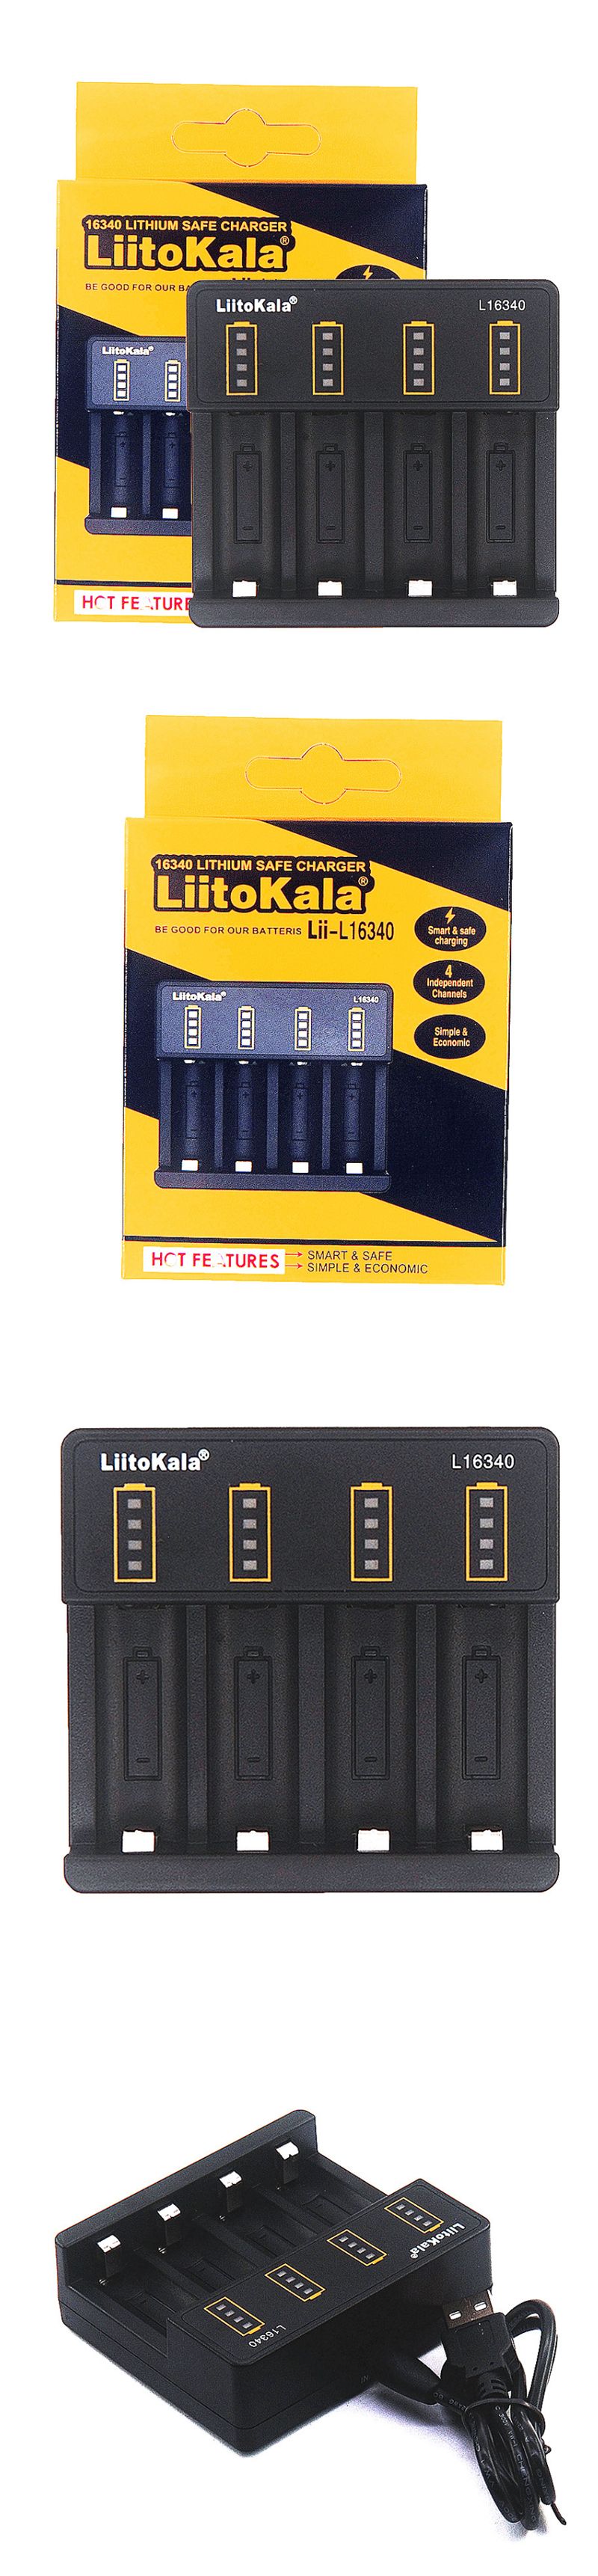 LiitoKala-16340-Battery-Charger-36V37V42V-4-Slots-USB-Lithium-ion-Battery-Charger-1604021